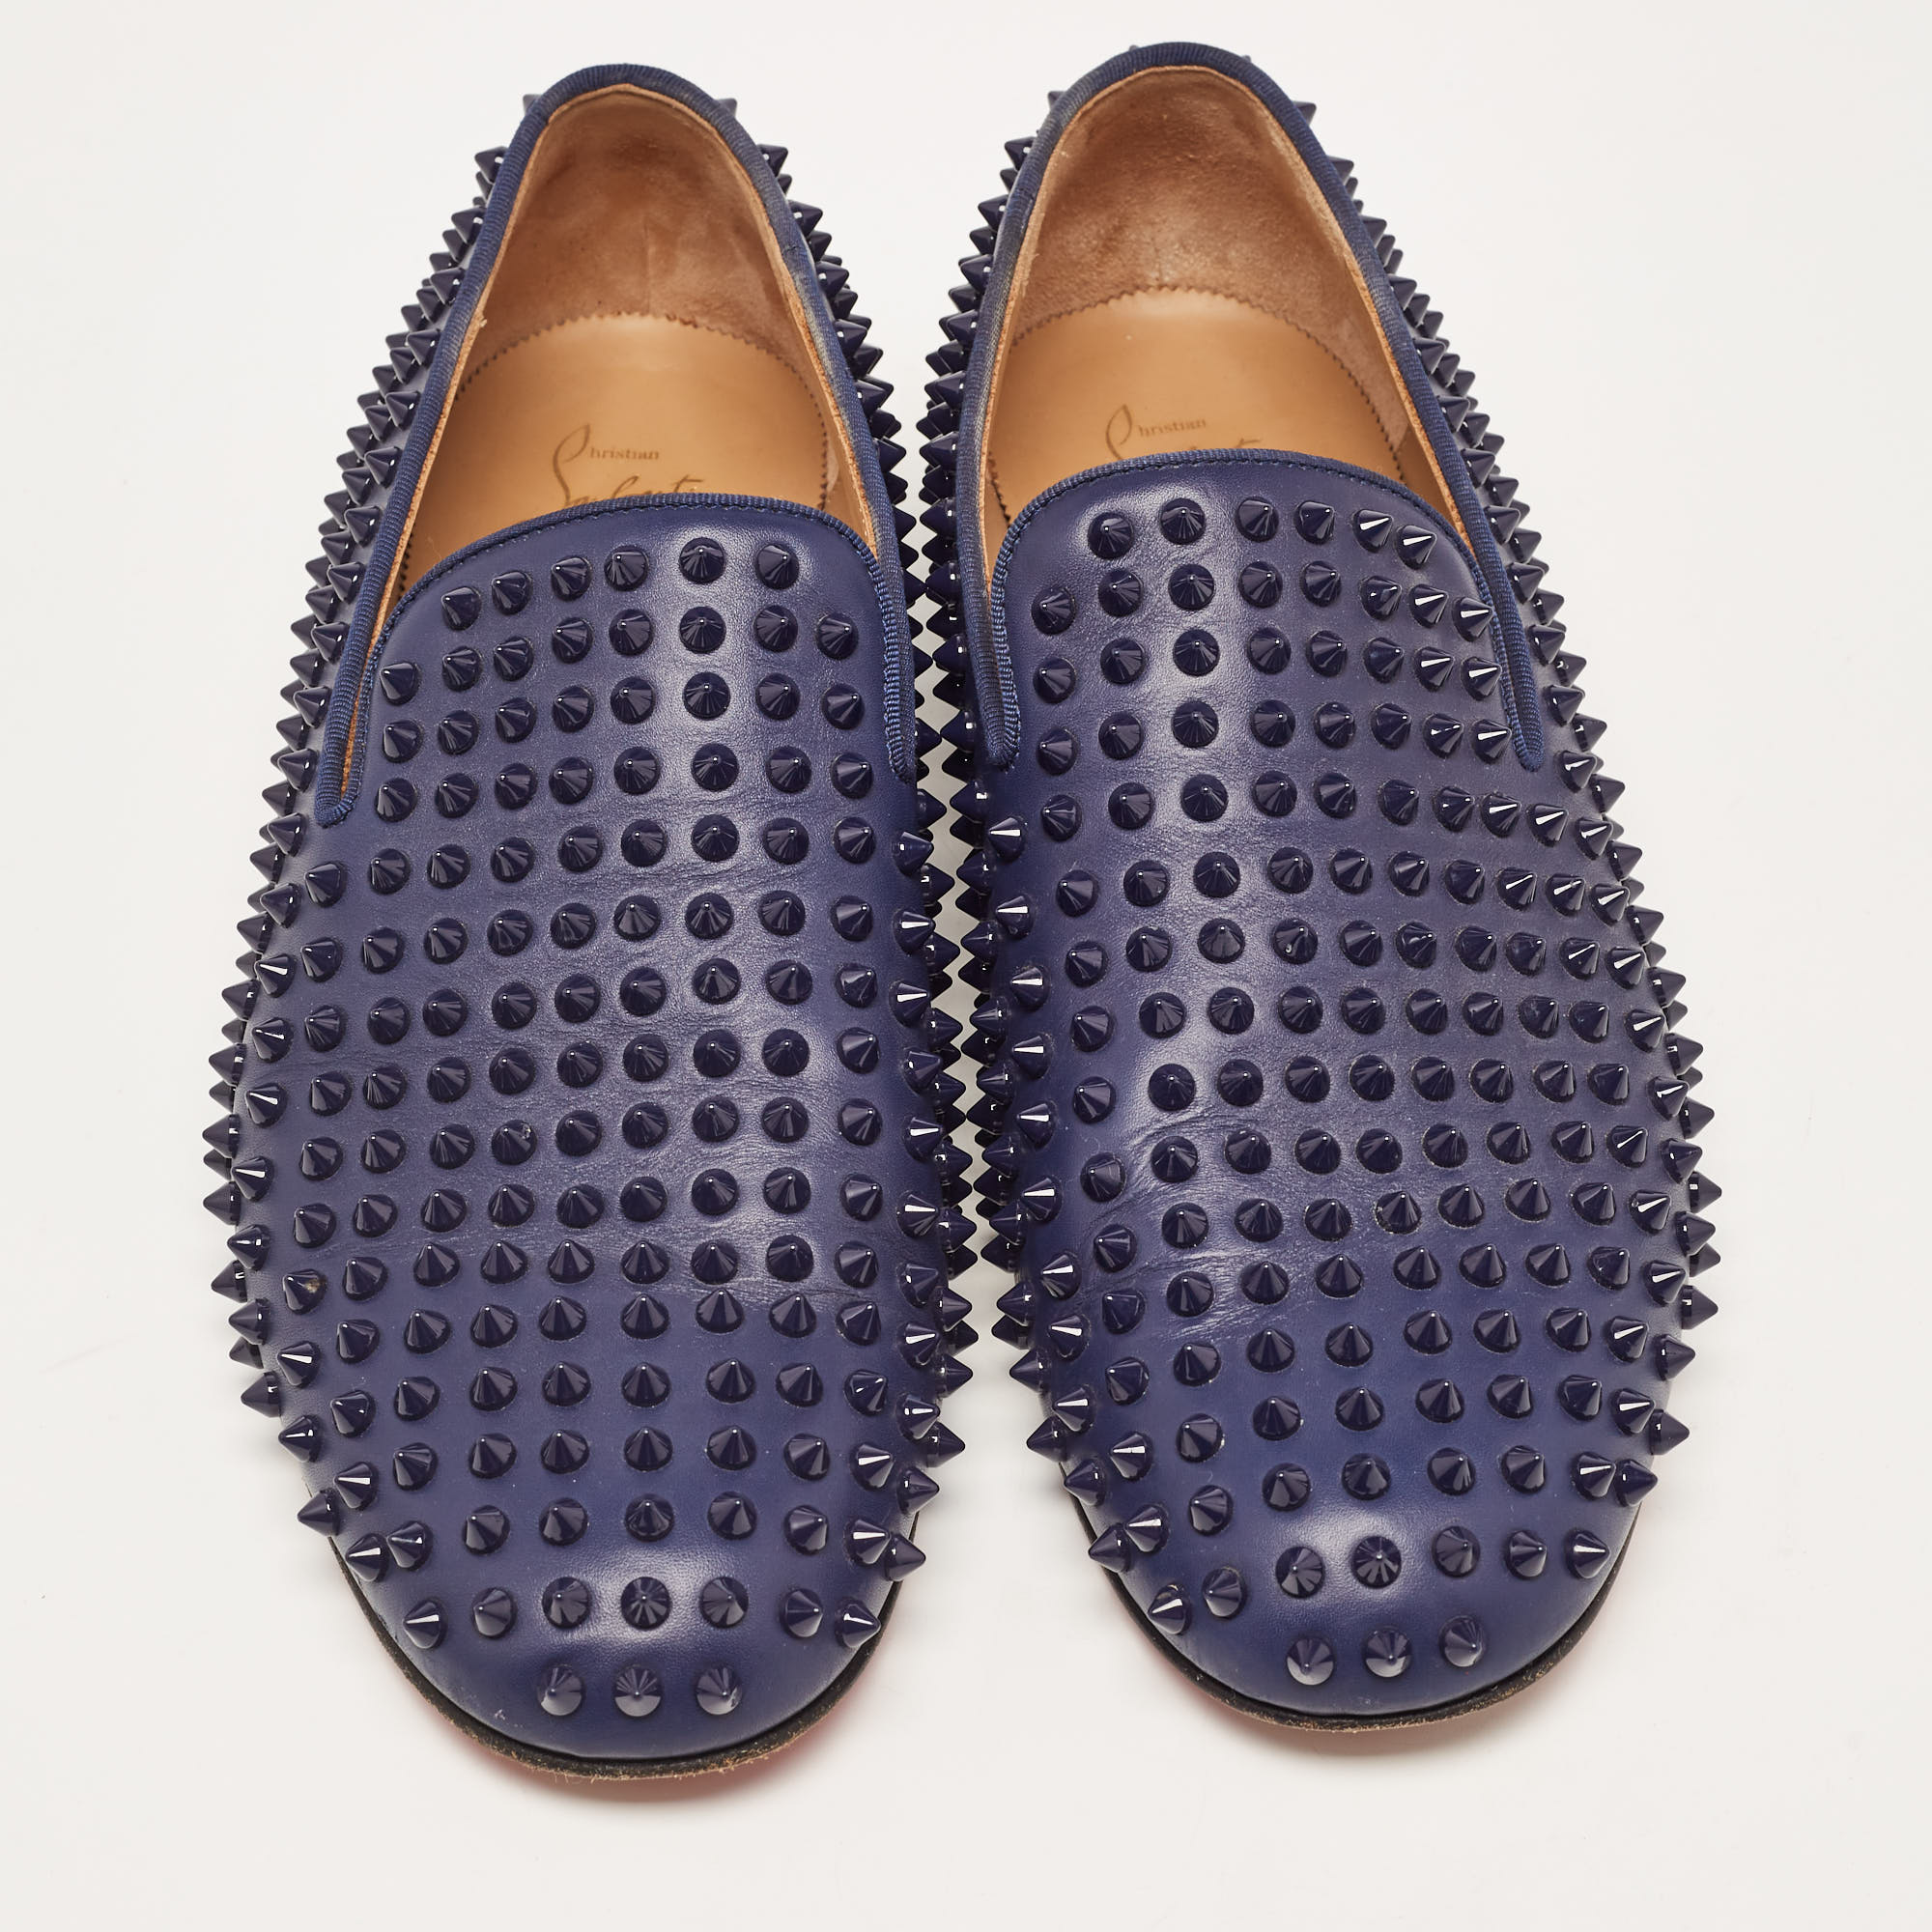 Christian Louboutin Navy Blue Leather Dandelion Spike Smoking Slippers Size 42.5